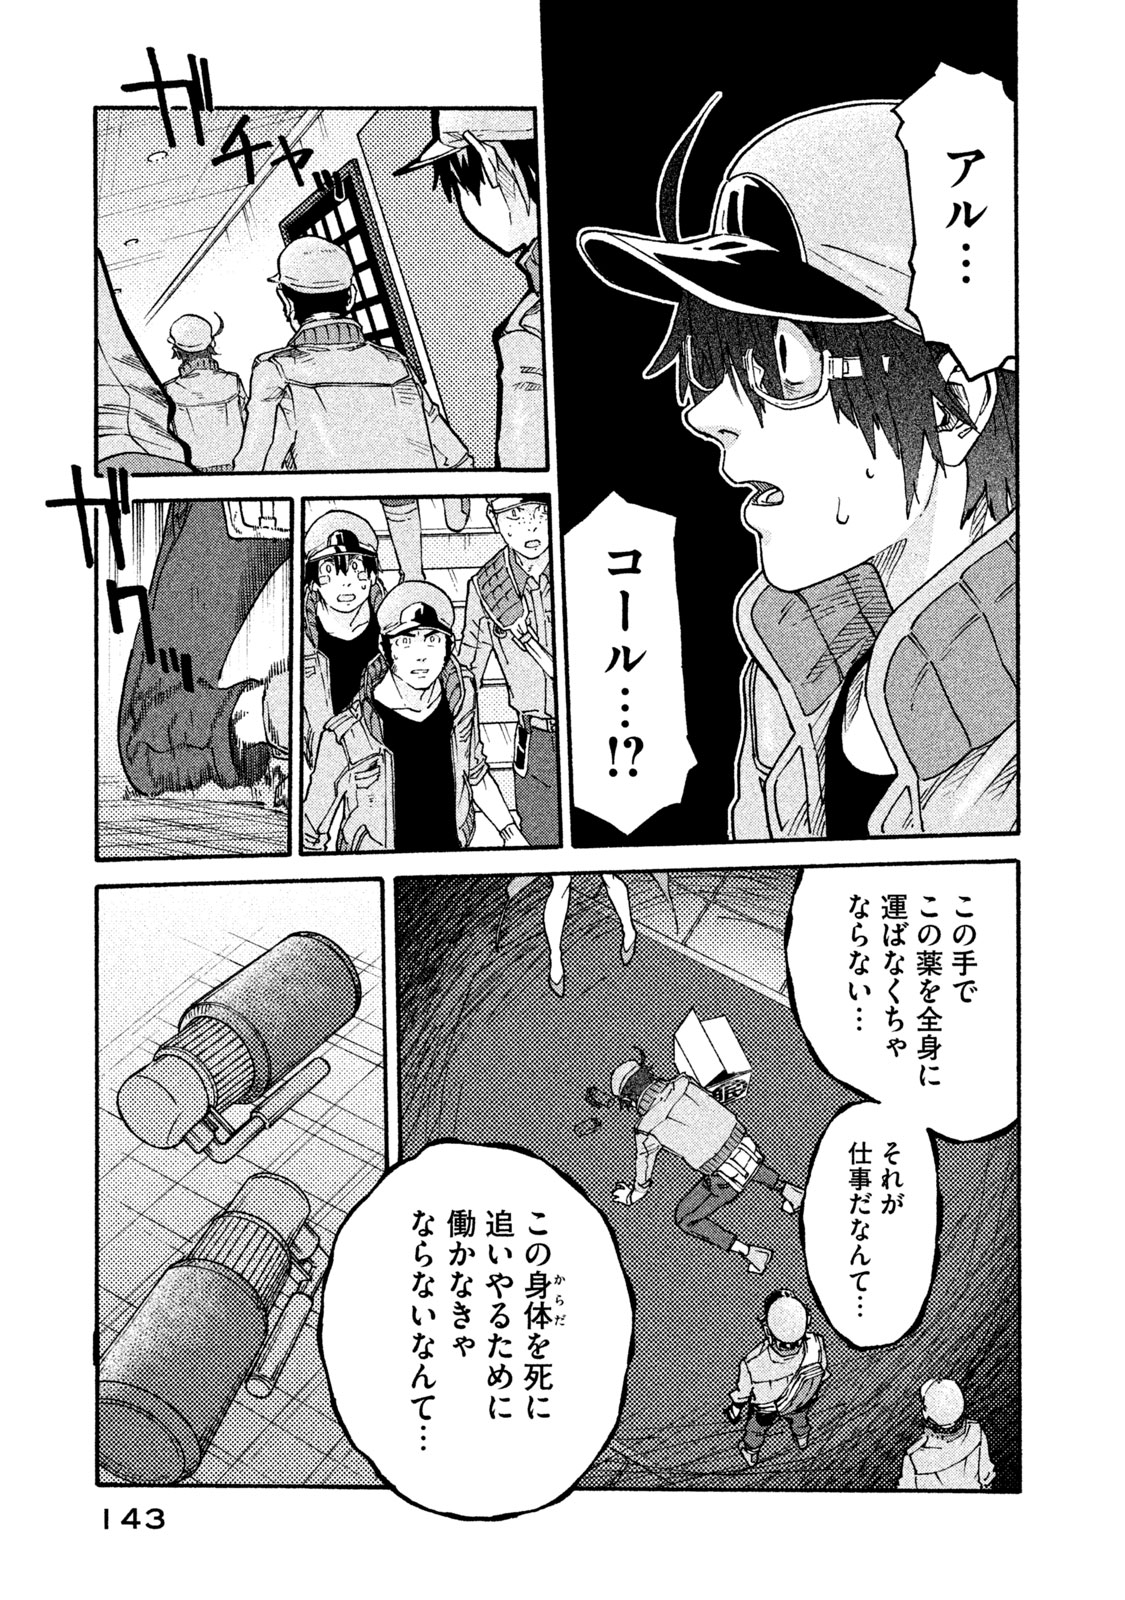 Hataraku Saibou BLACK - Chapter 31 - Page 19